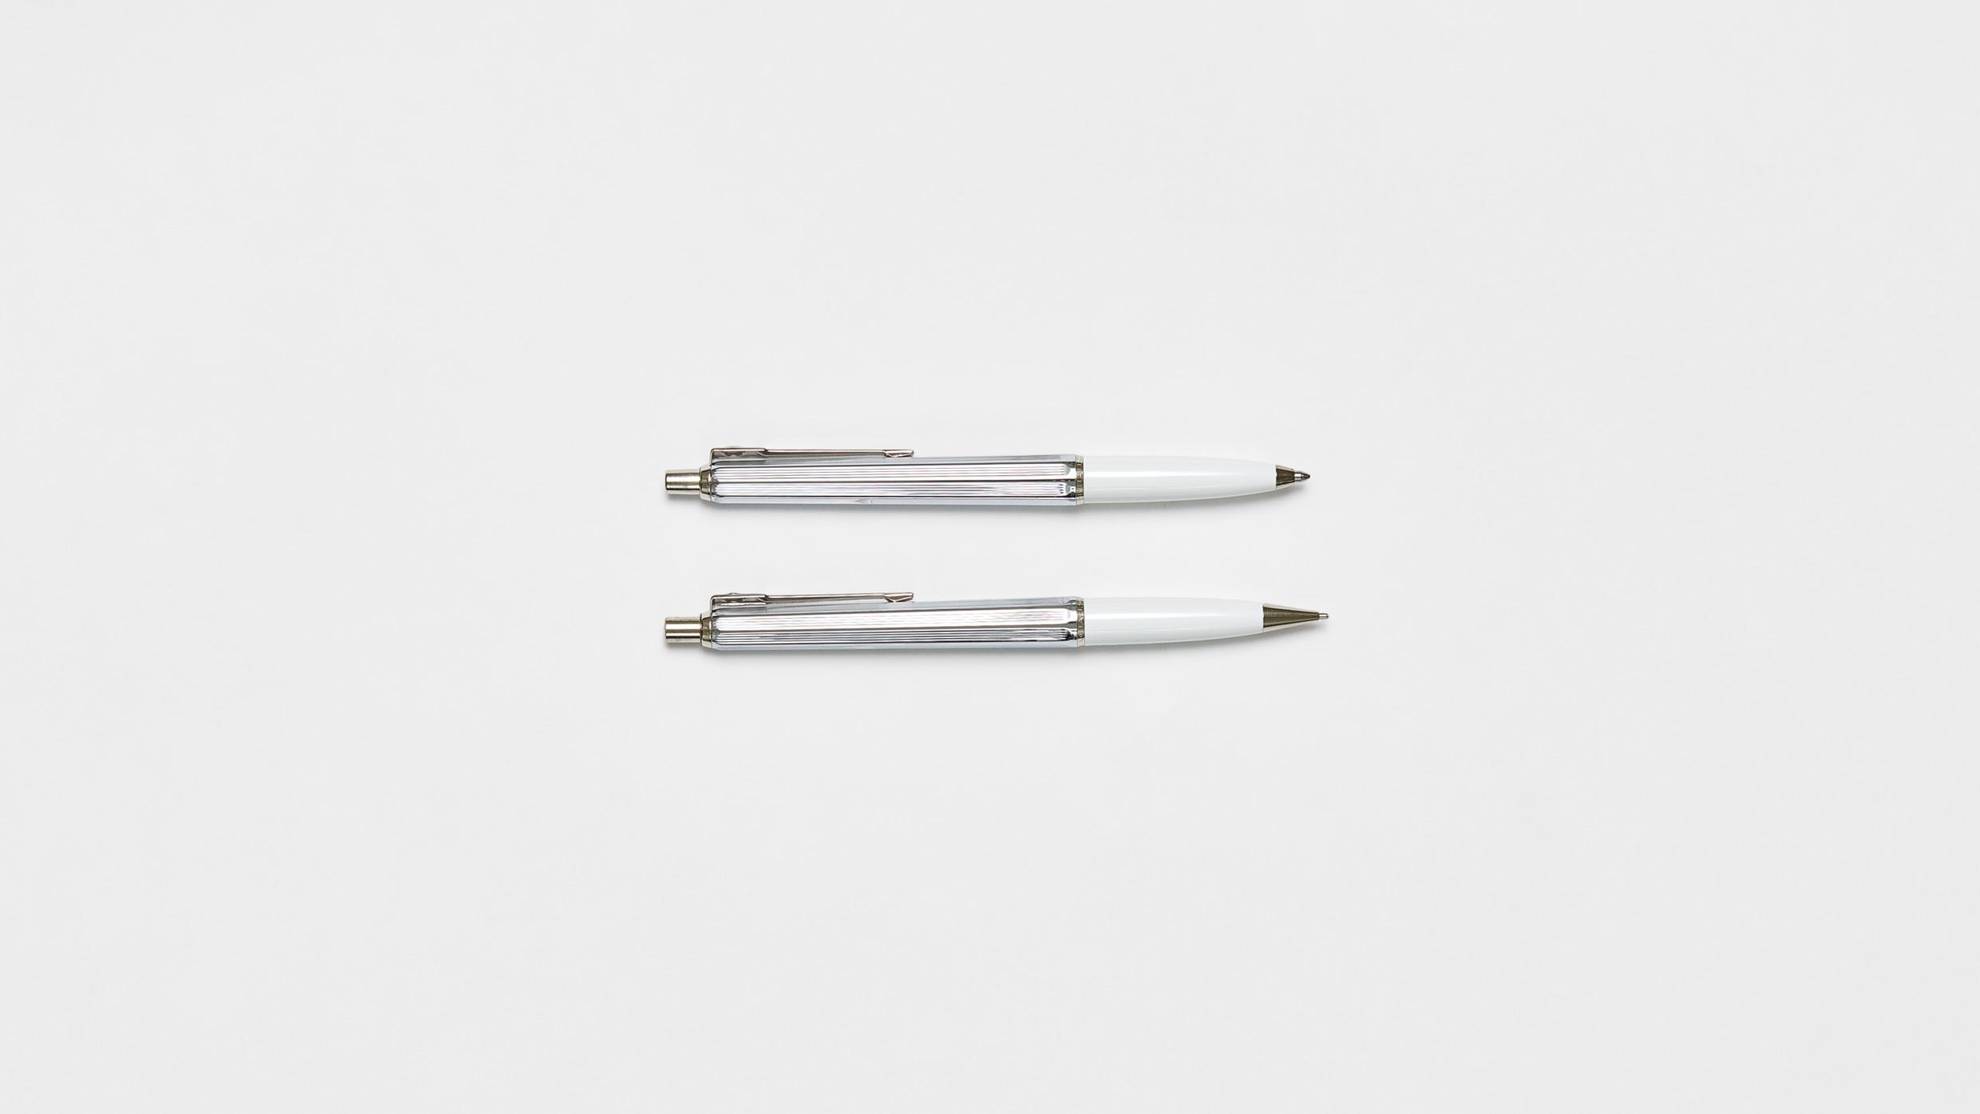 Two ballograf pencils on a white surface.